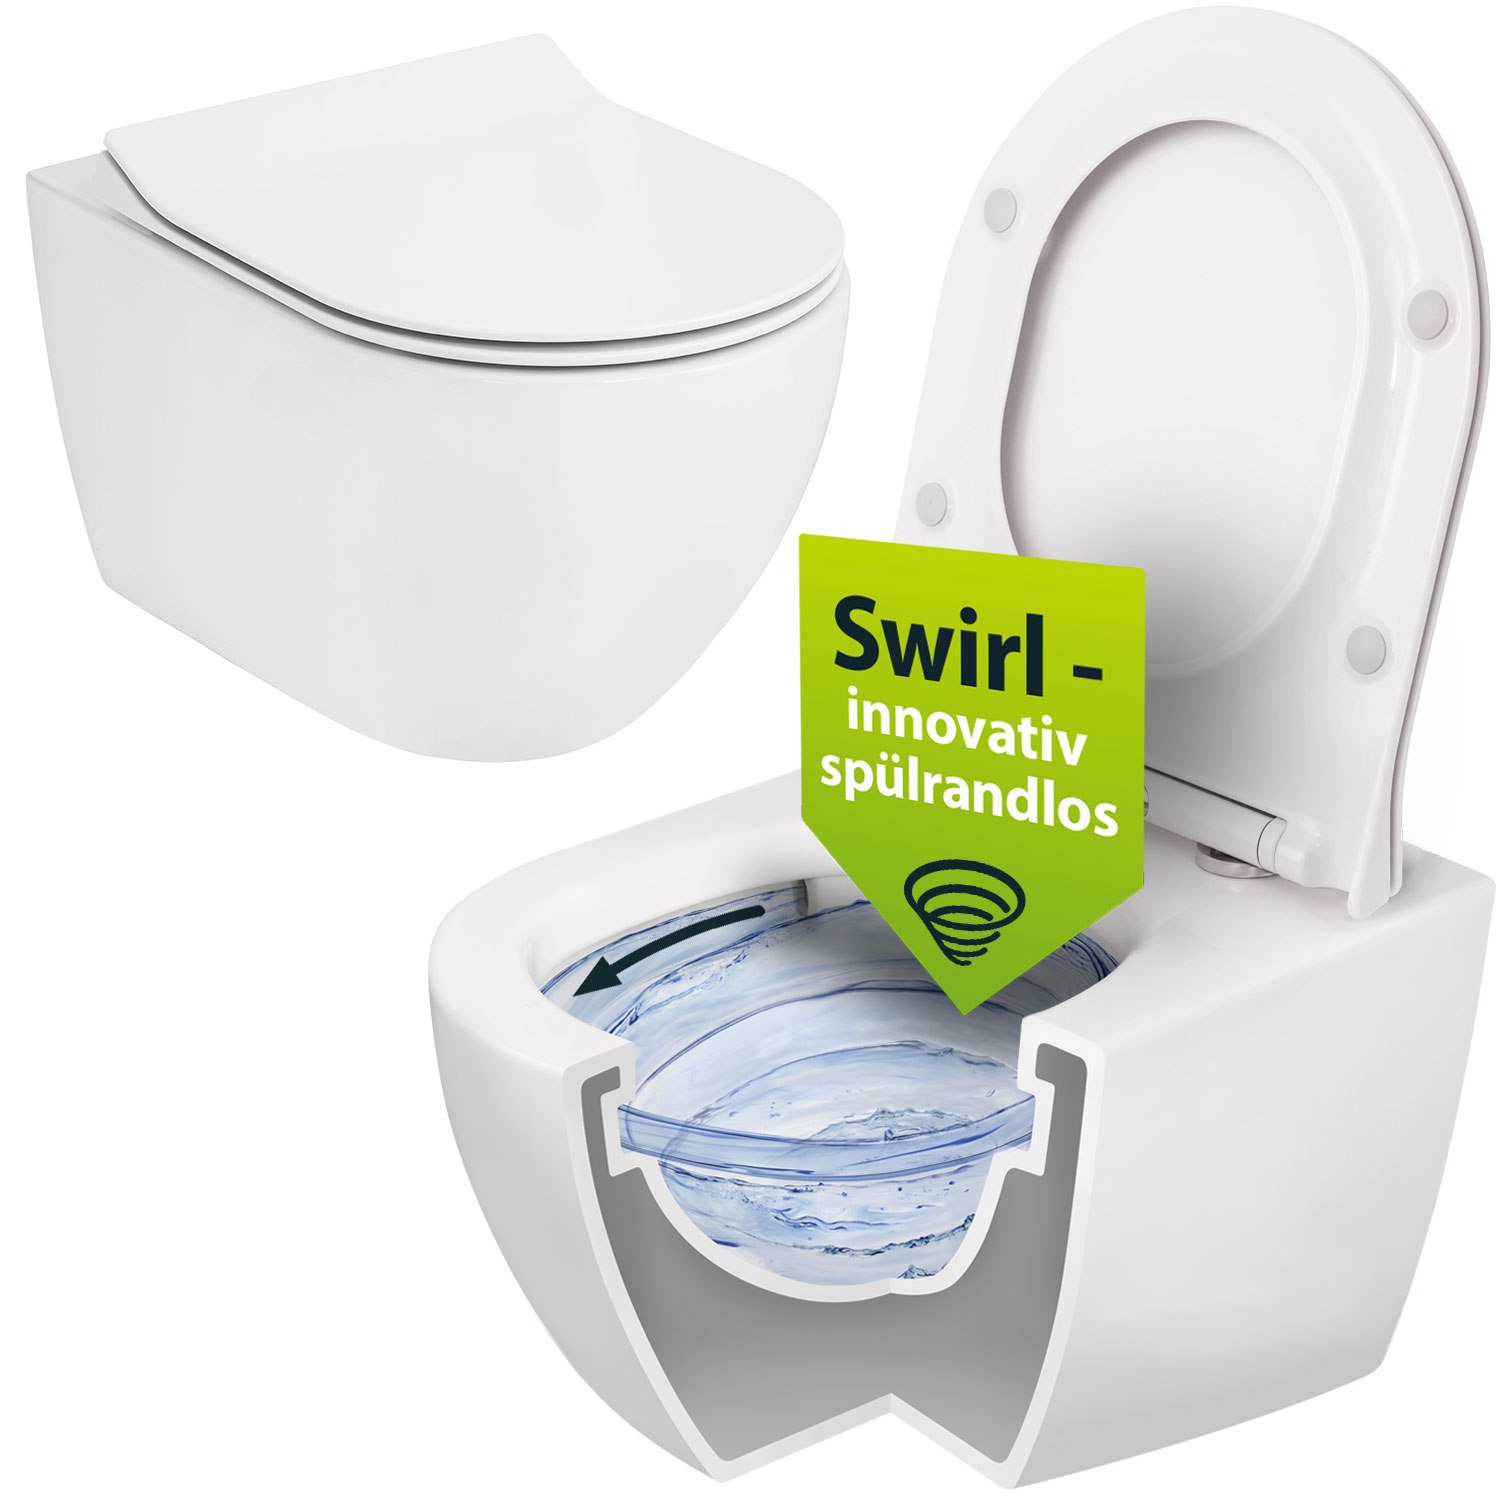 'aquaSu® Wand-WC Spülrandlos 2.0, innovative Swirl-Spülung, spritzfrei, leise, Sitz, Weiß